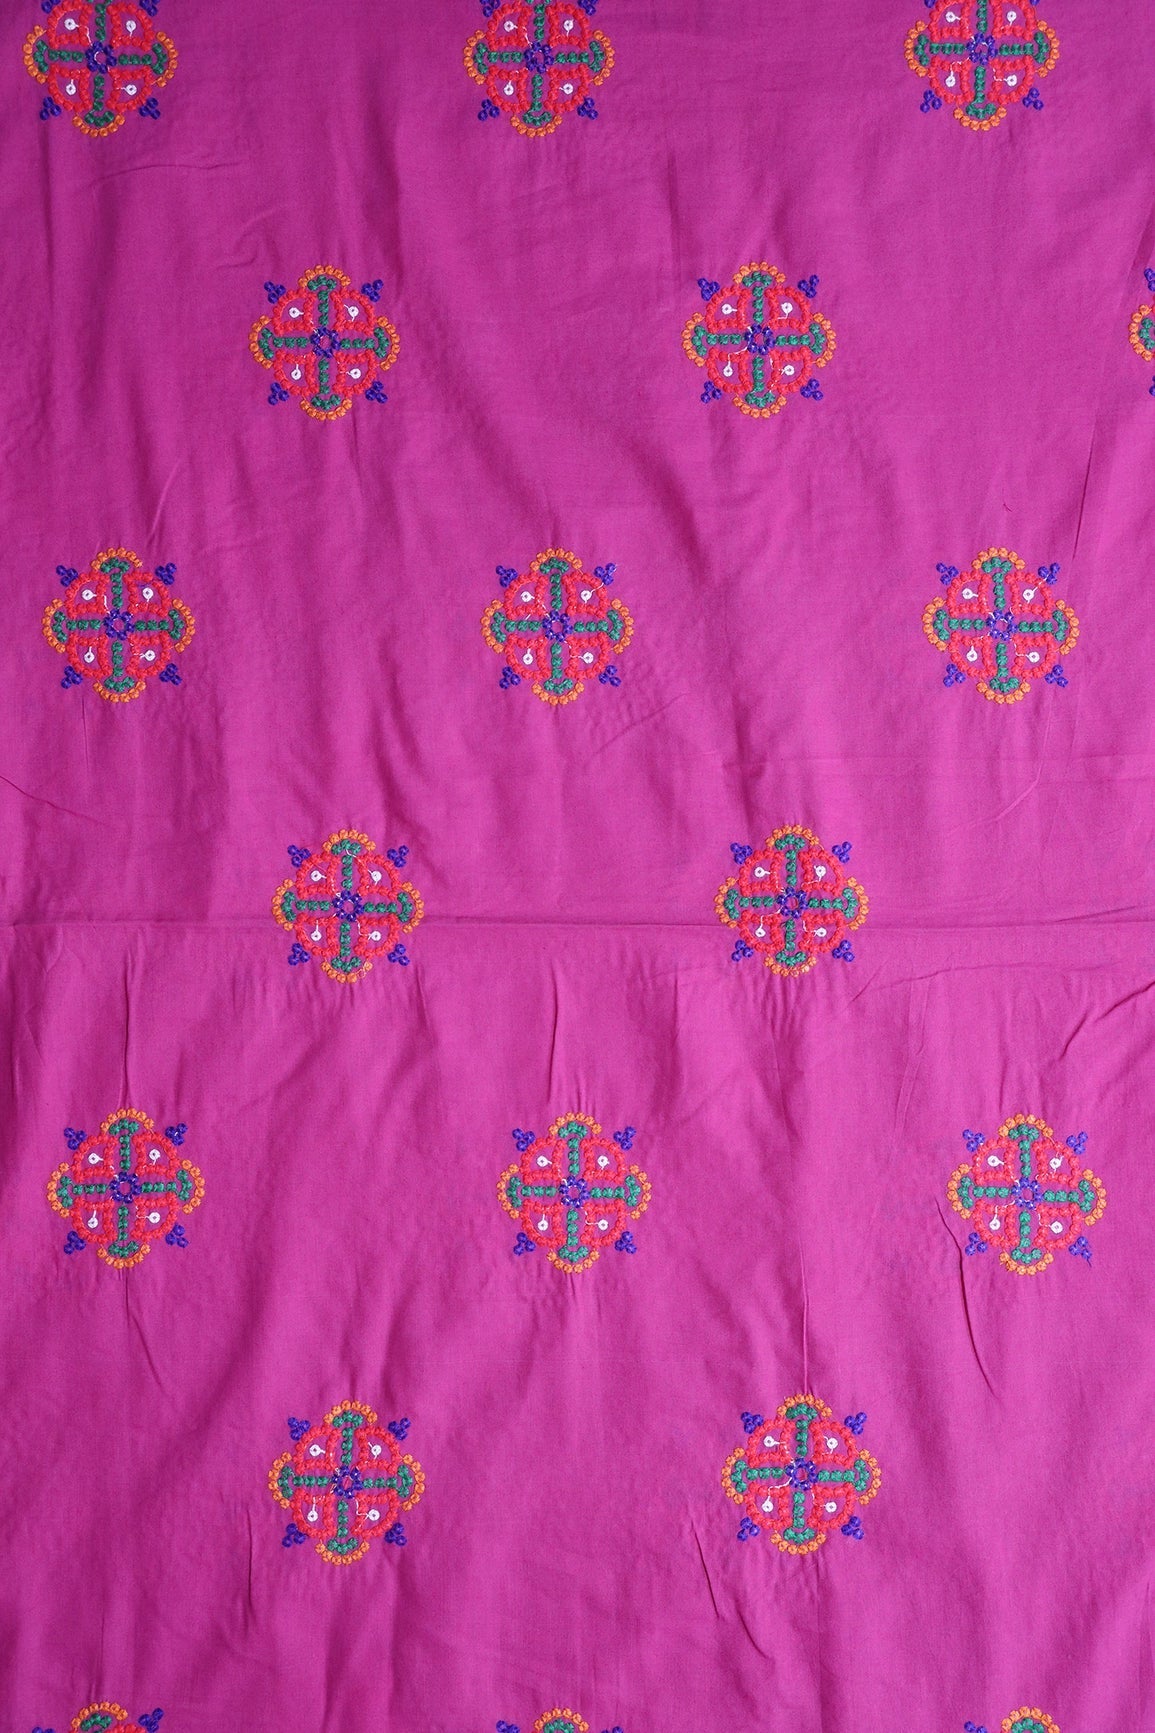 Multi Thread Floral Embroidery On Fuchsia Cotton Fabric - doeraa